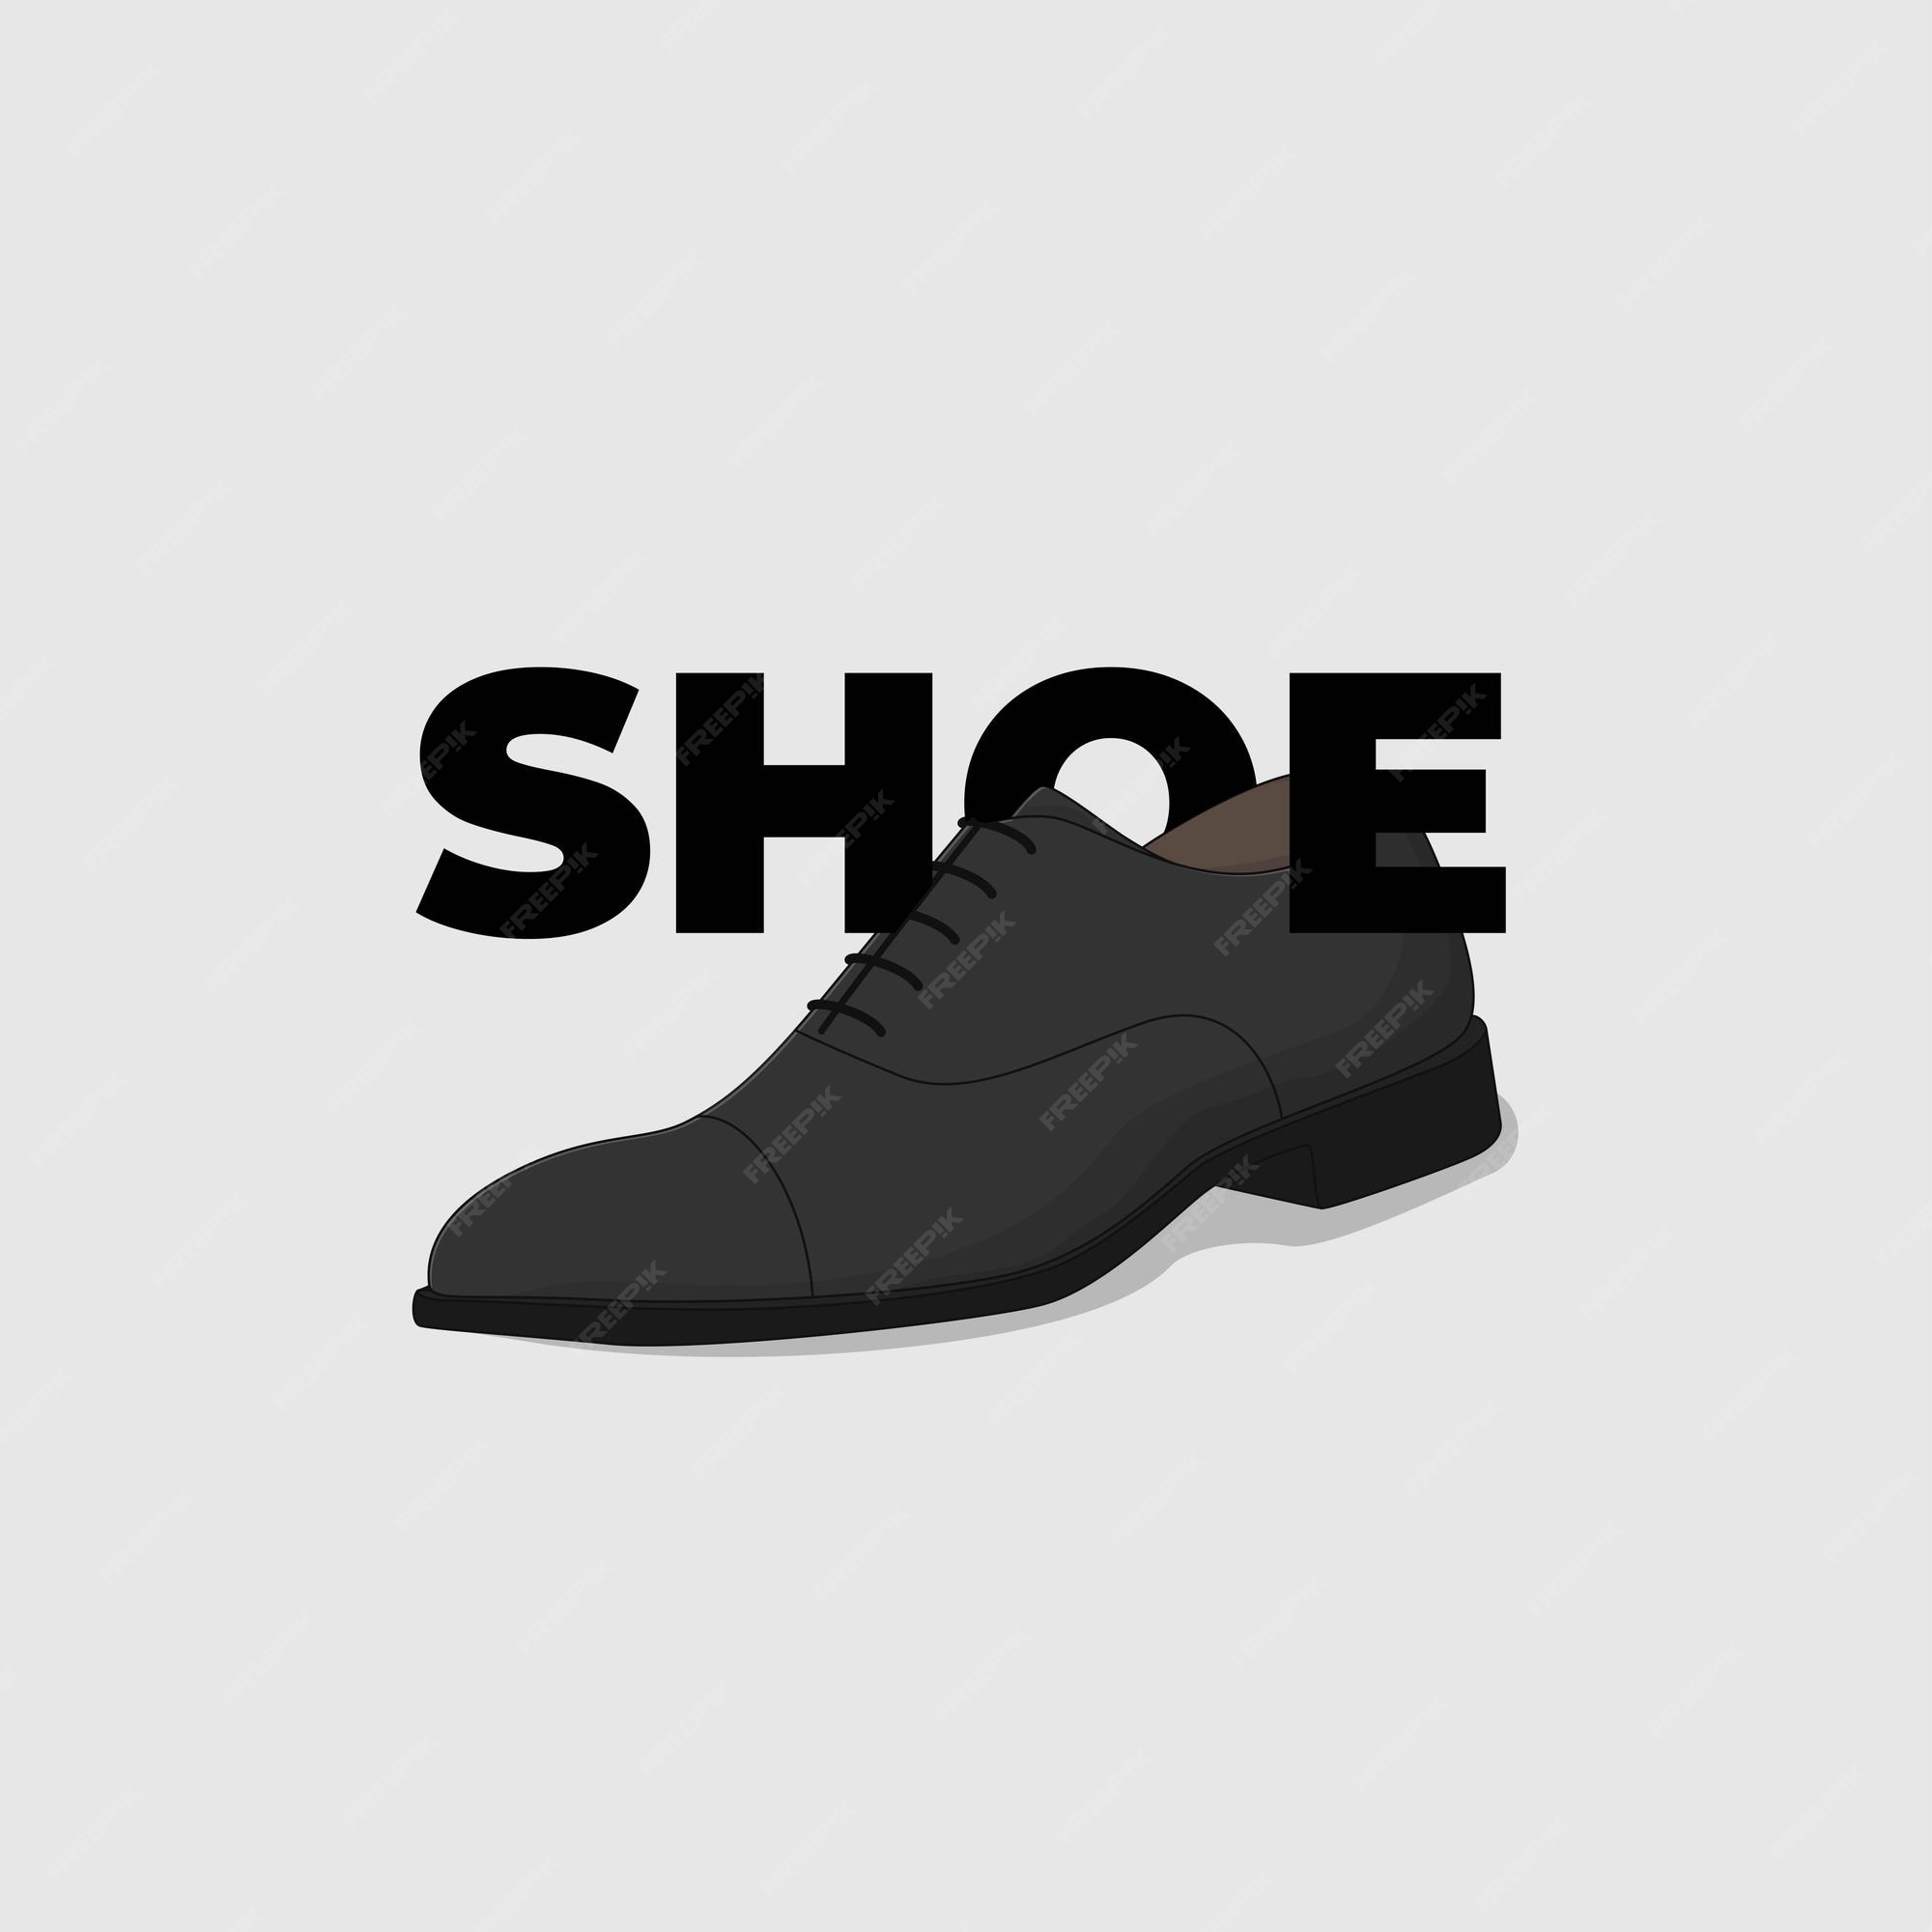 Premium Vector | Single black shoe cartoon illustration with simple  typography design